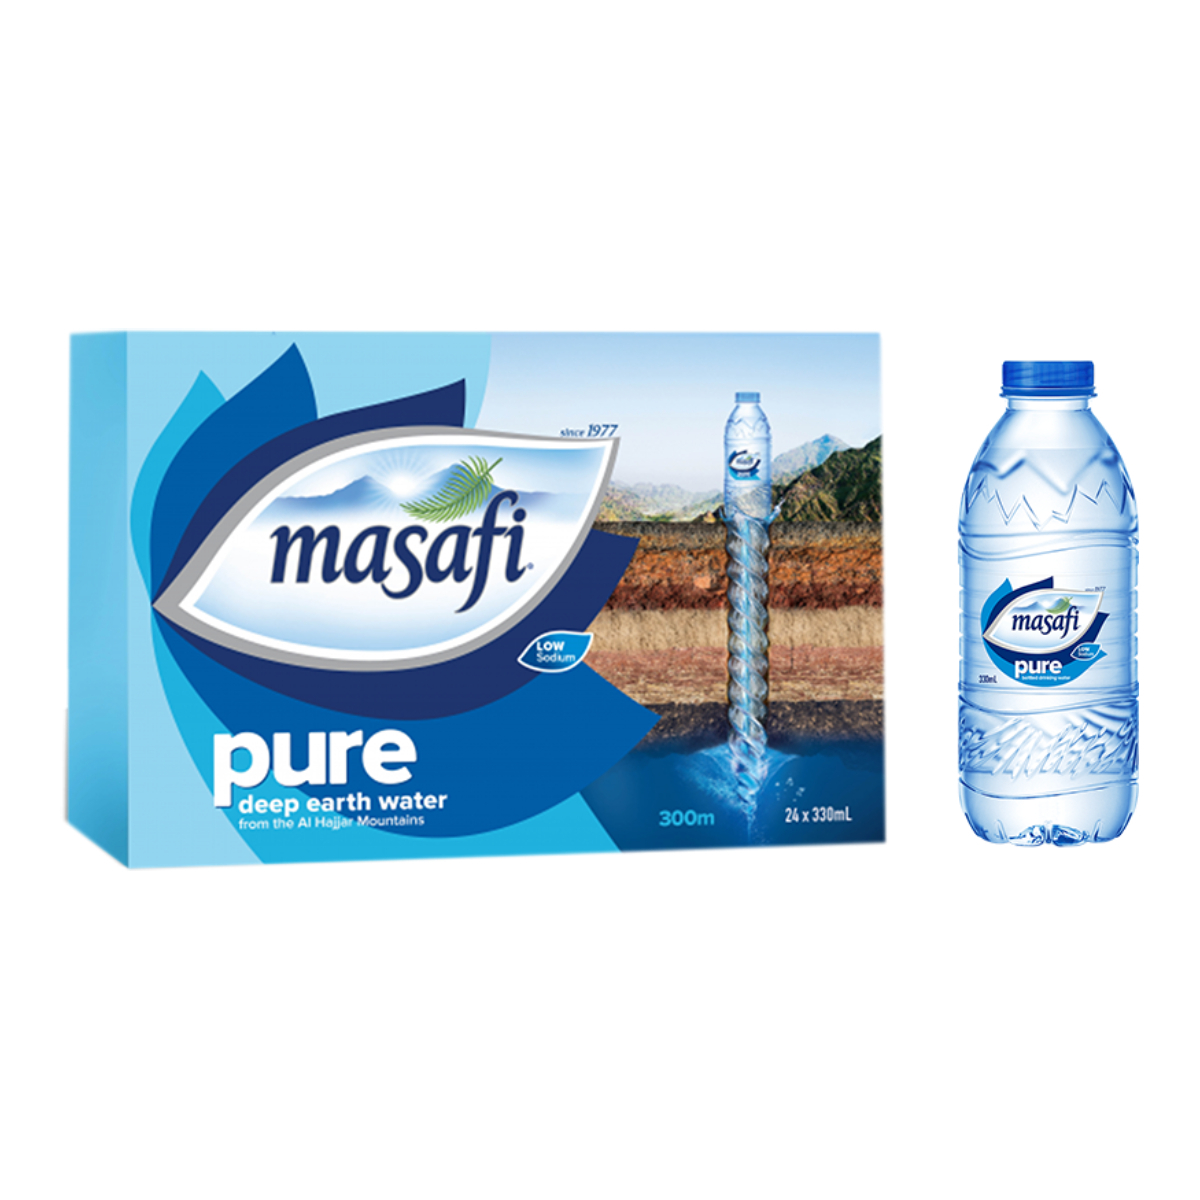 Masafi Pure Bottled Drinking Water 24 x 330 ml